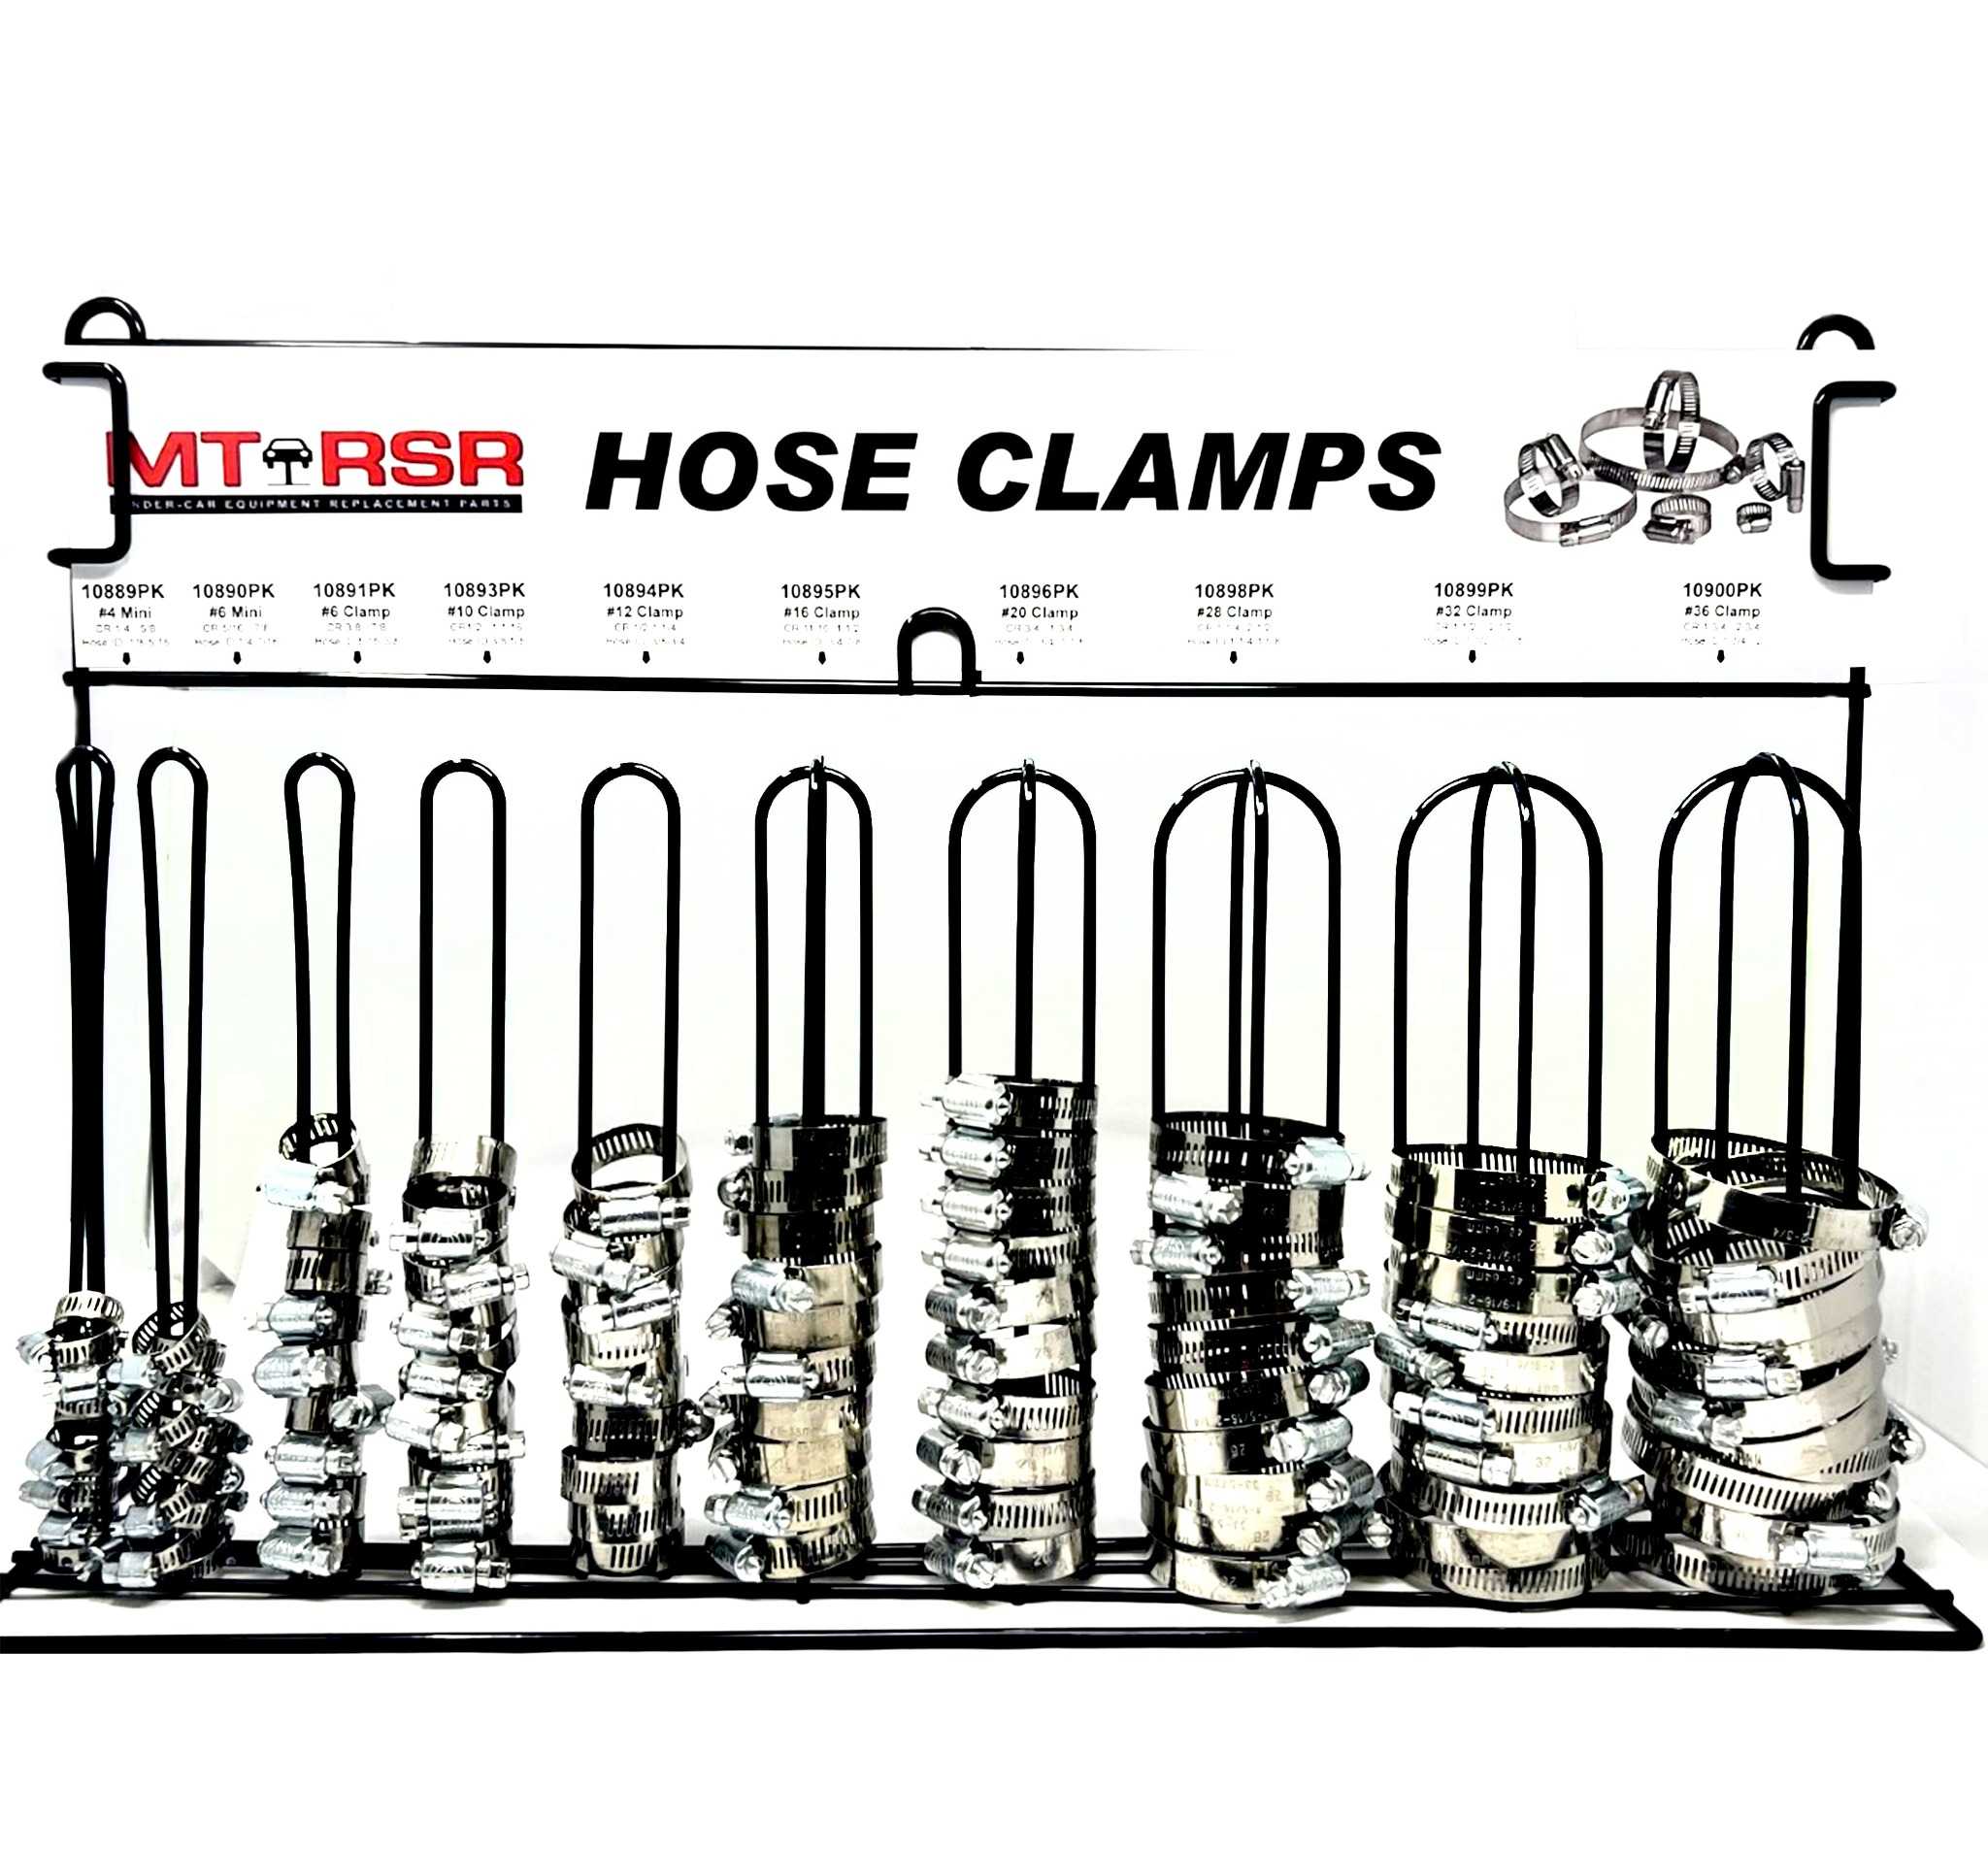 Rack for standard clamp sizes 4 36, mini sizes 4 & 6